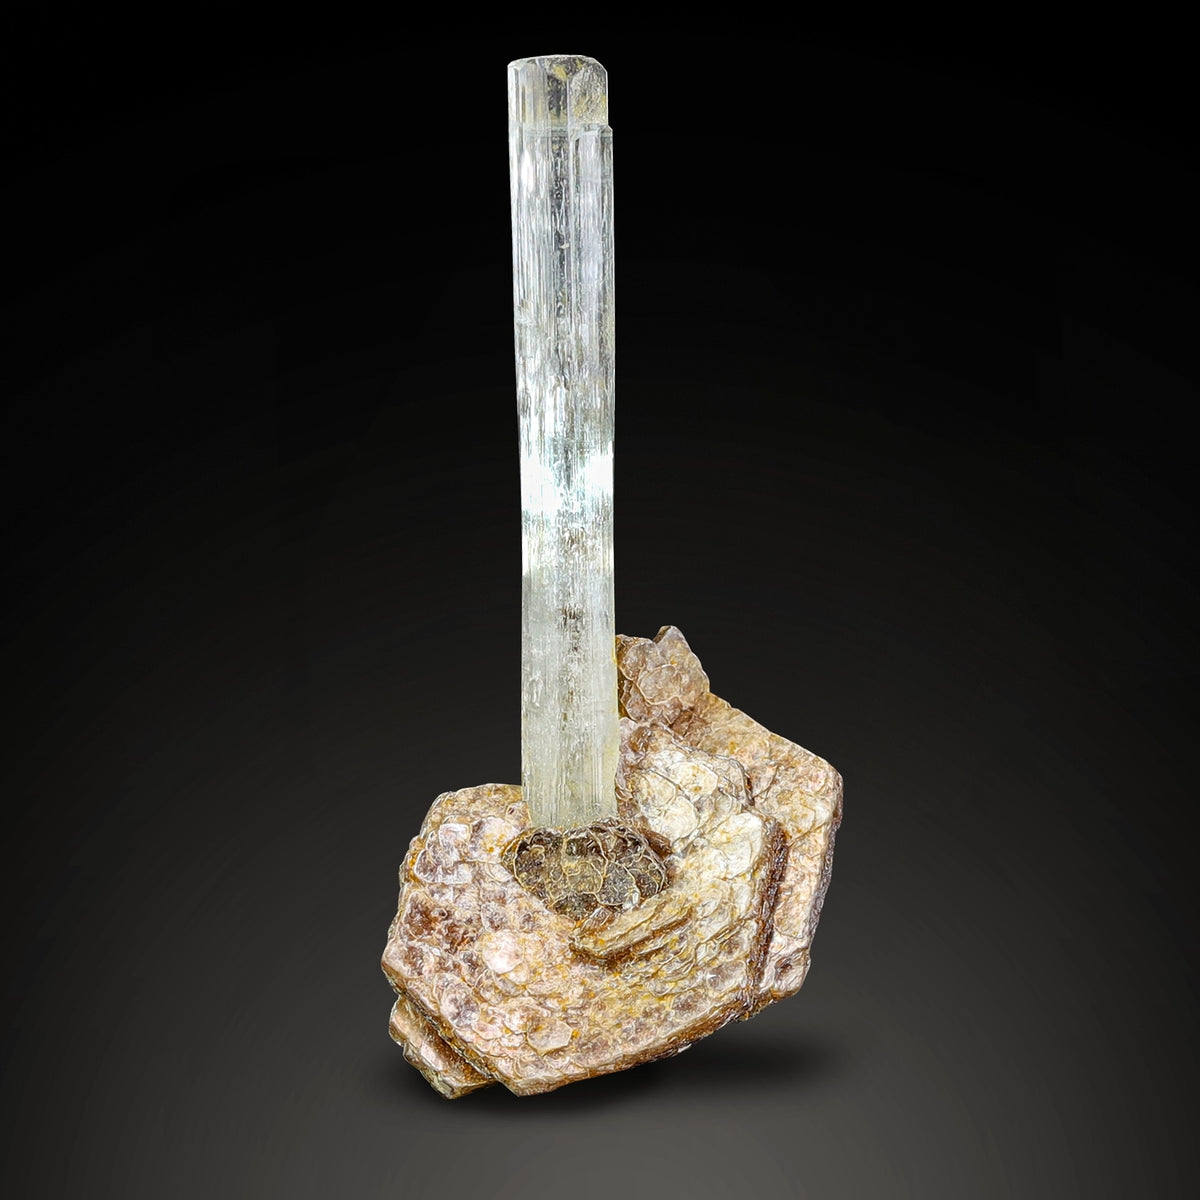 Elongated Aquamarine Crystal on Muscovite from Pakistan